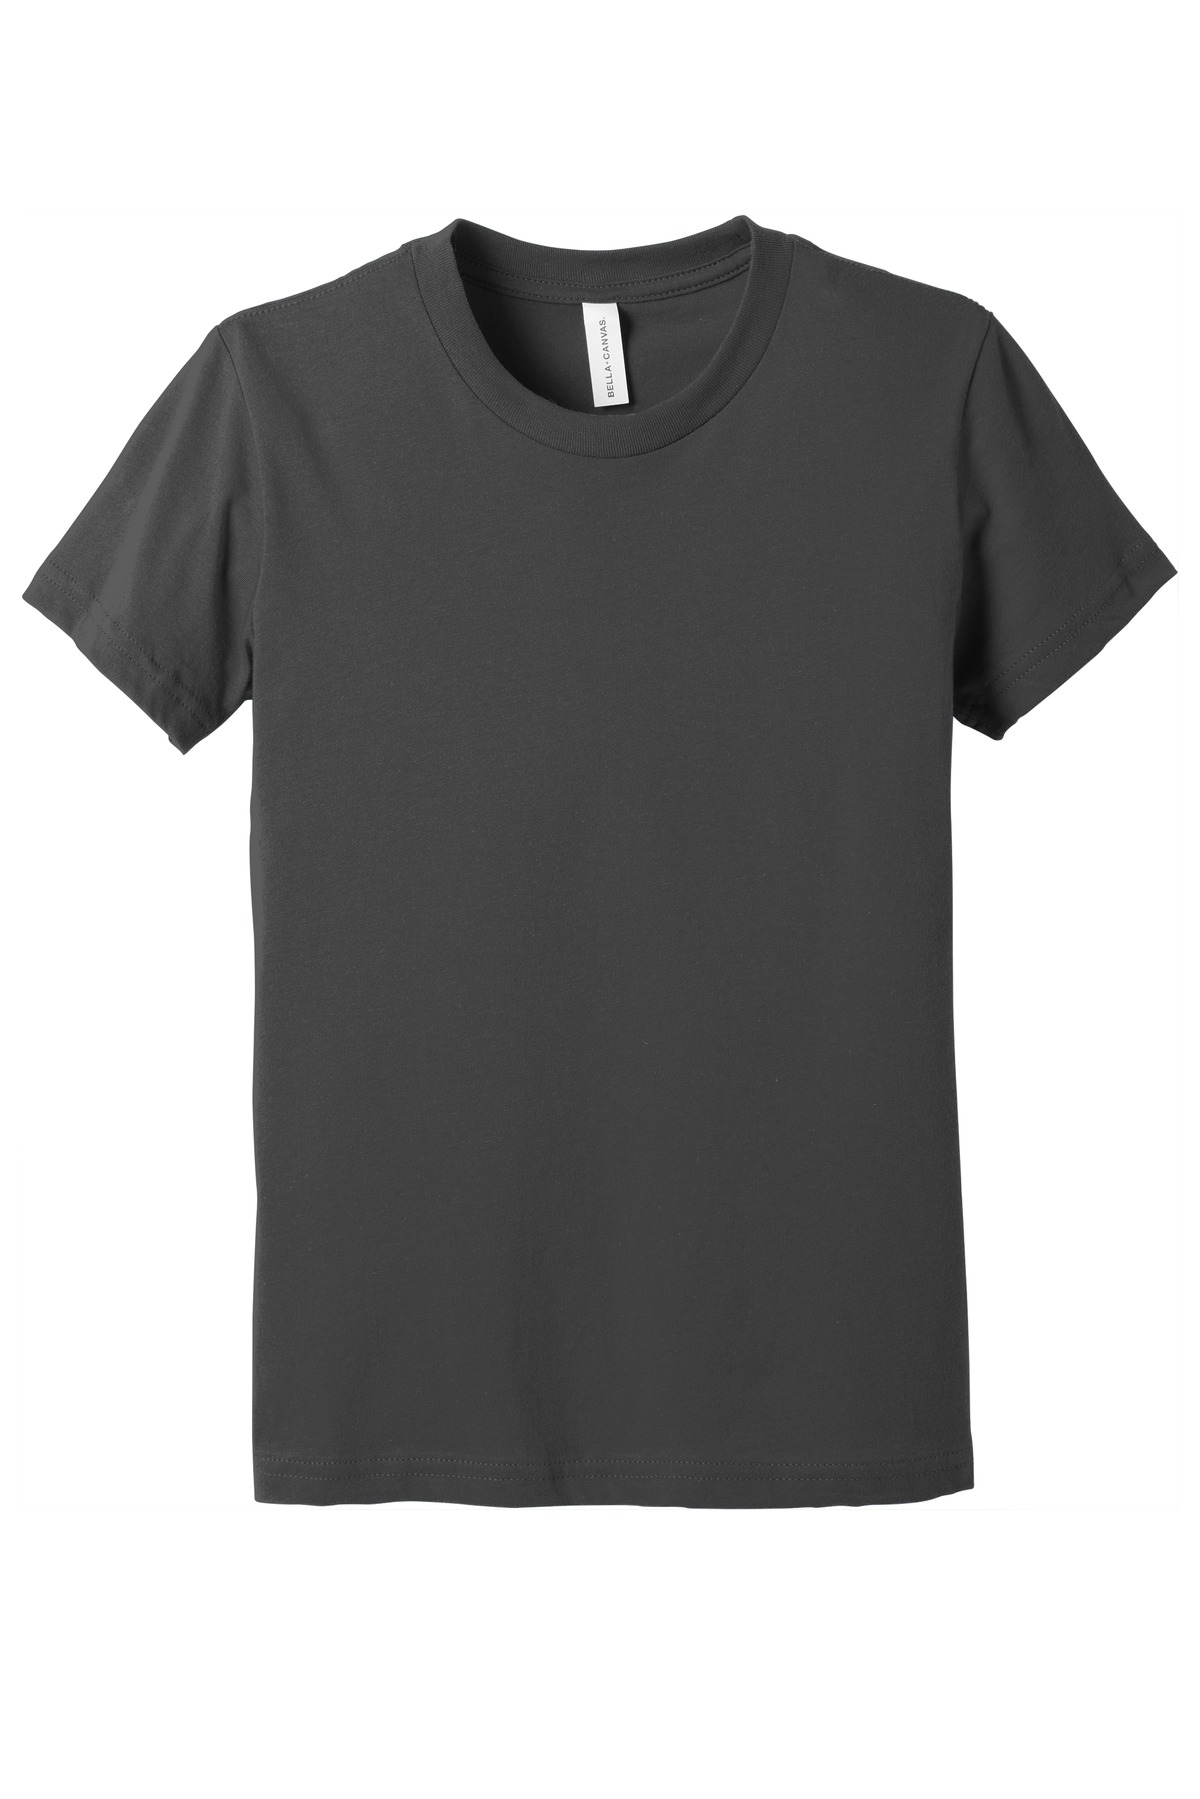 BELLA+CANVAS ® Youth Jersey Short Sleeve Tee. BC3001Y - Custom Shirt Shop